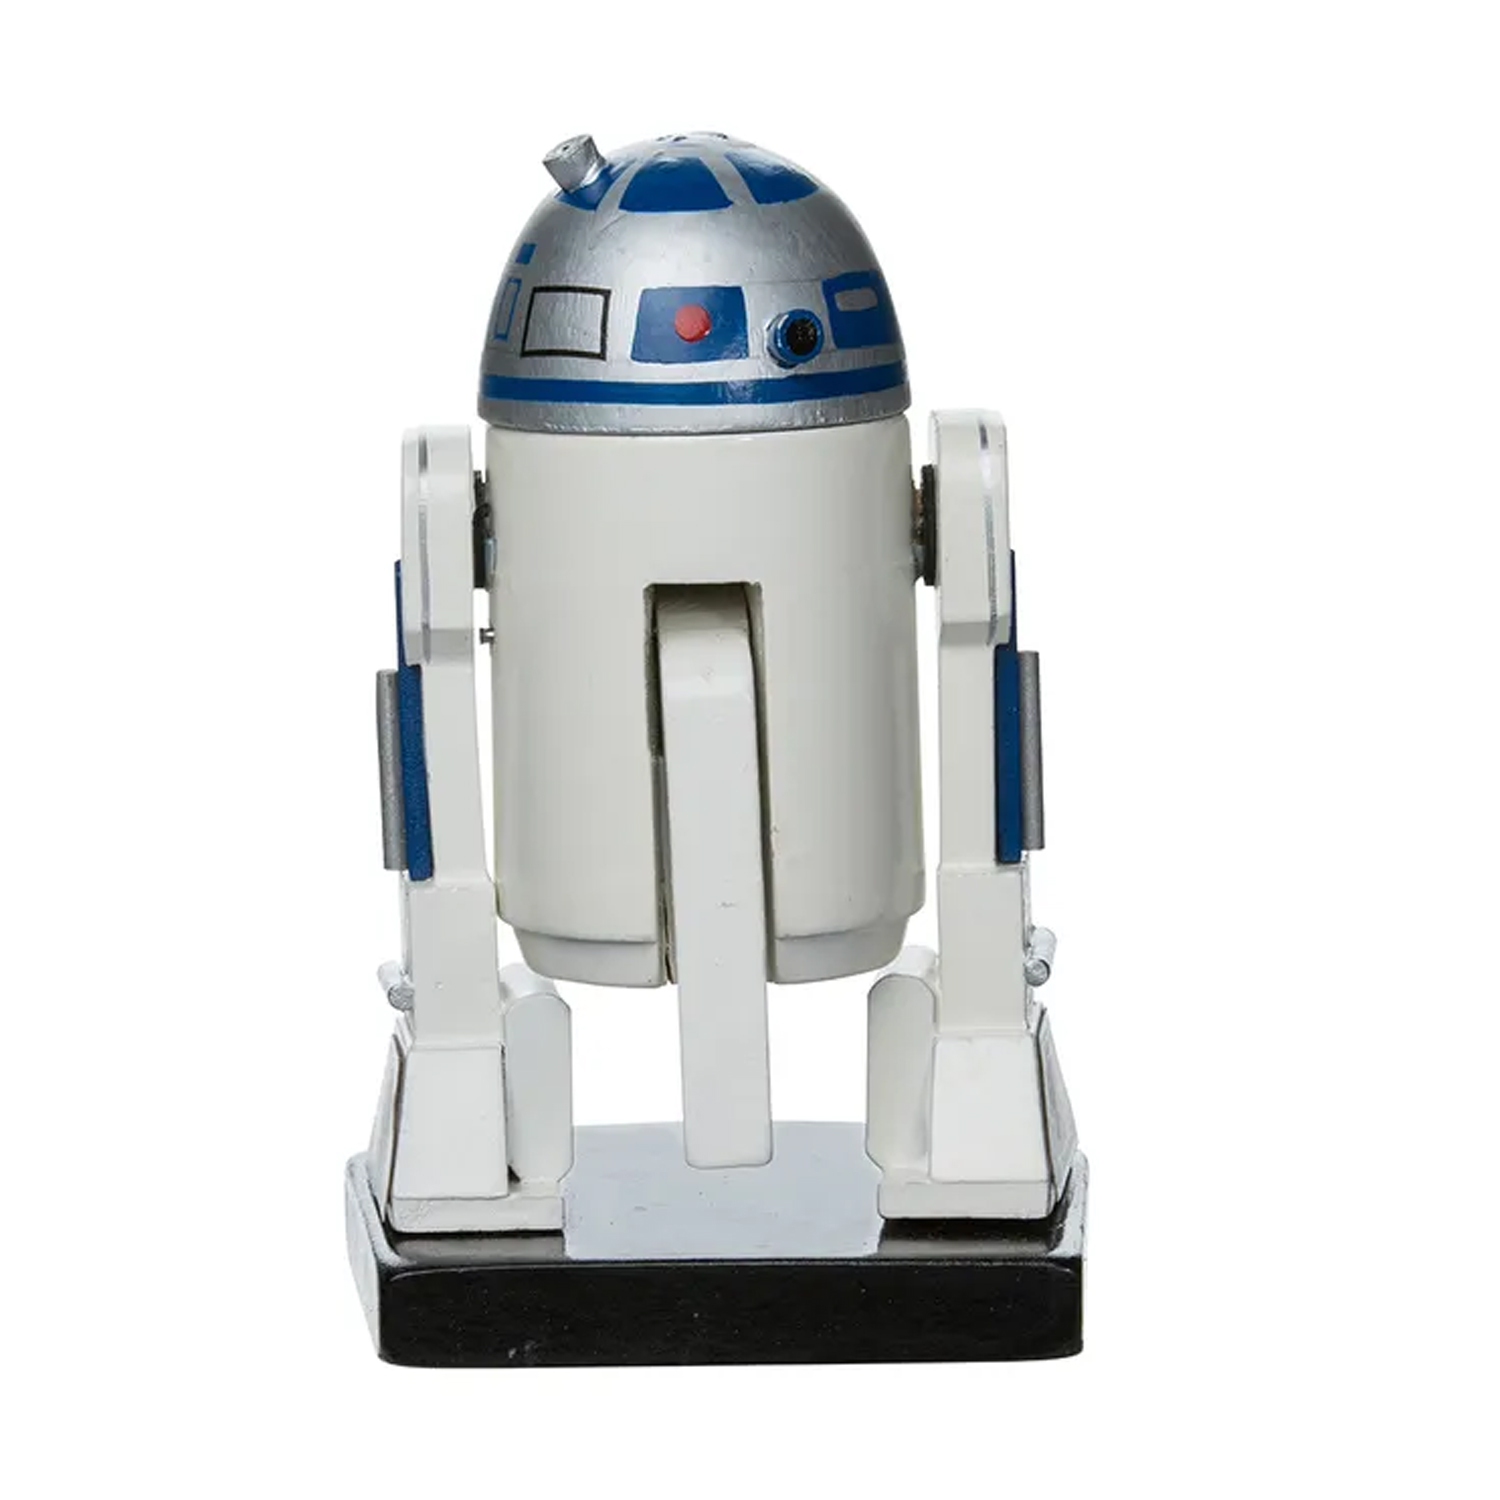 Kurt Adler SW01567 Star Wars R2D2 7-Inch Nutcracker Figurine for Fans and Collectors - image 4 of 8